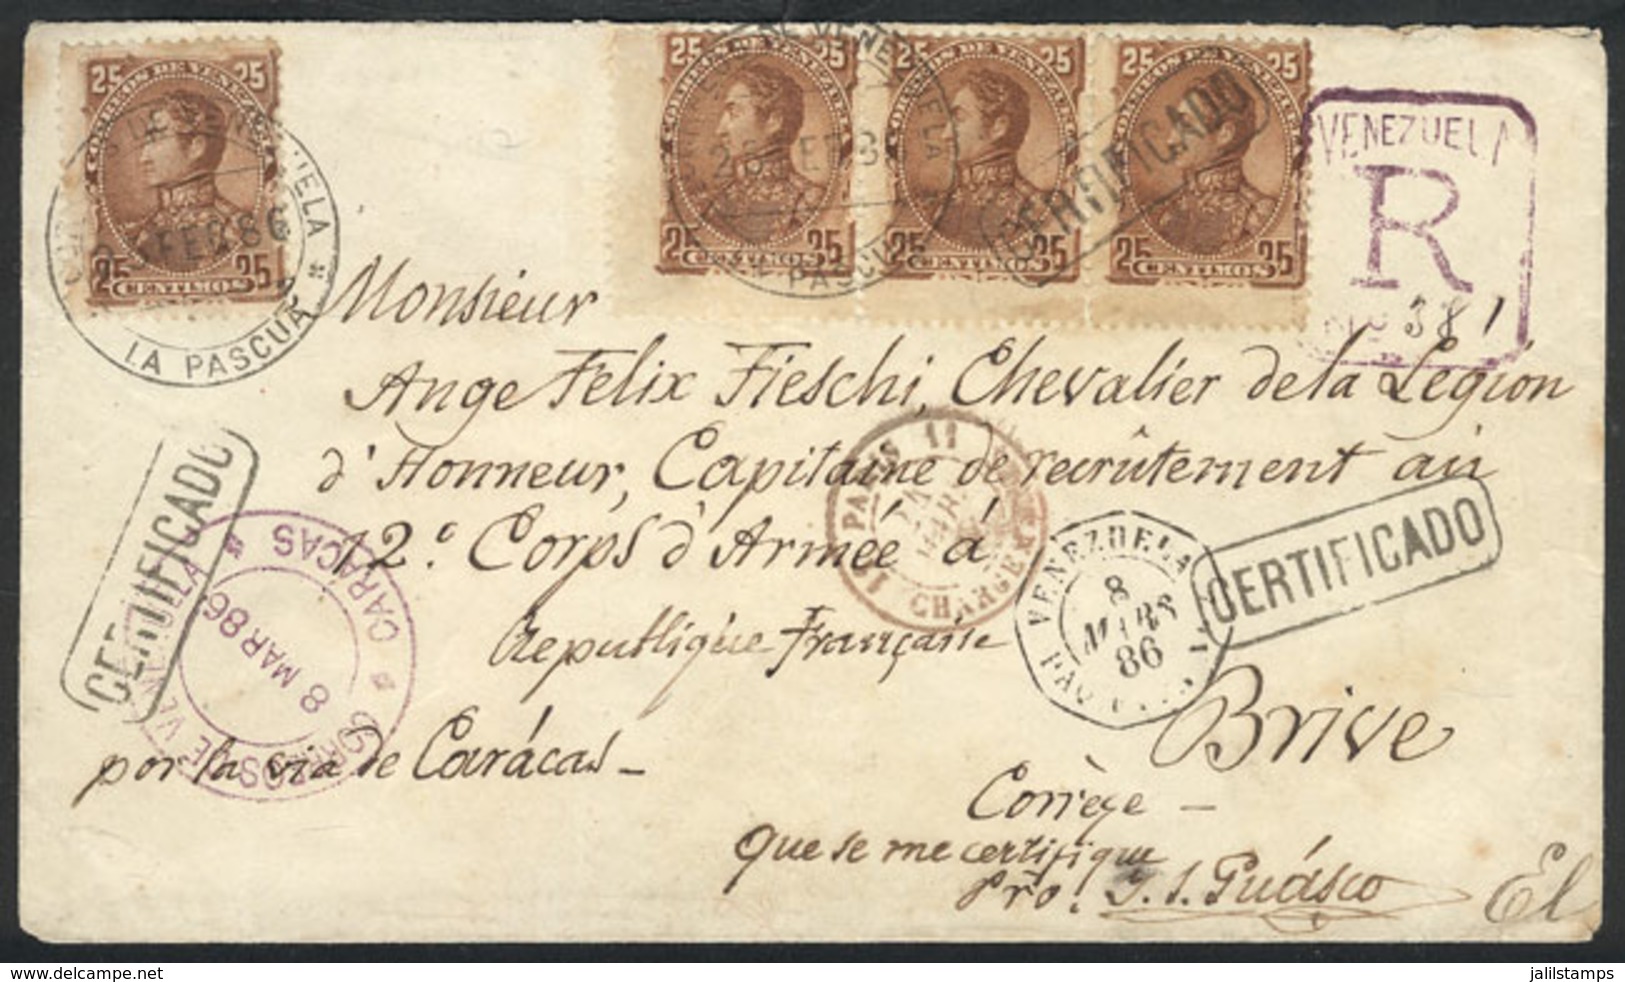 VENEZUELA: 25/FE/1886 La Pascua - France: Cover Franked By Sc.76 (strip Of 3 + 1, Total Postage 1B.), Many Markings, VF  - Venezuela